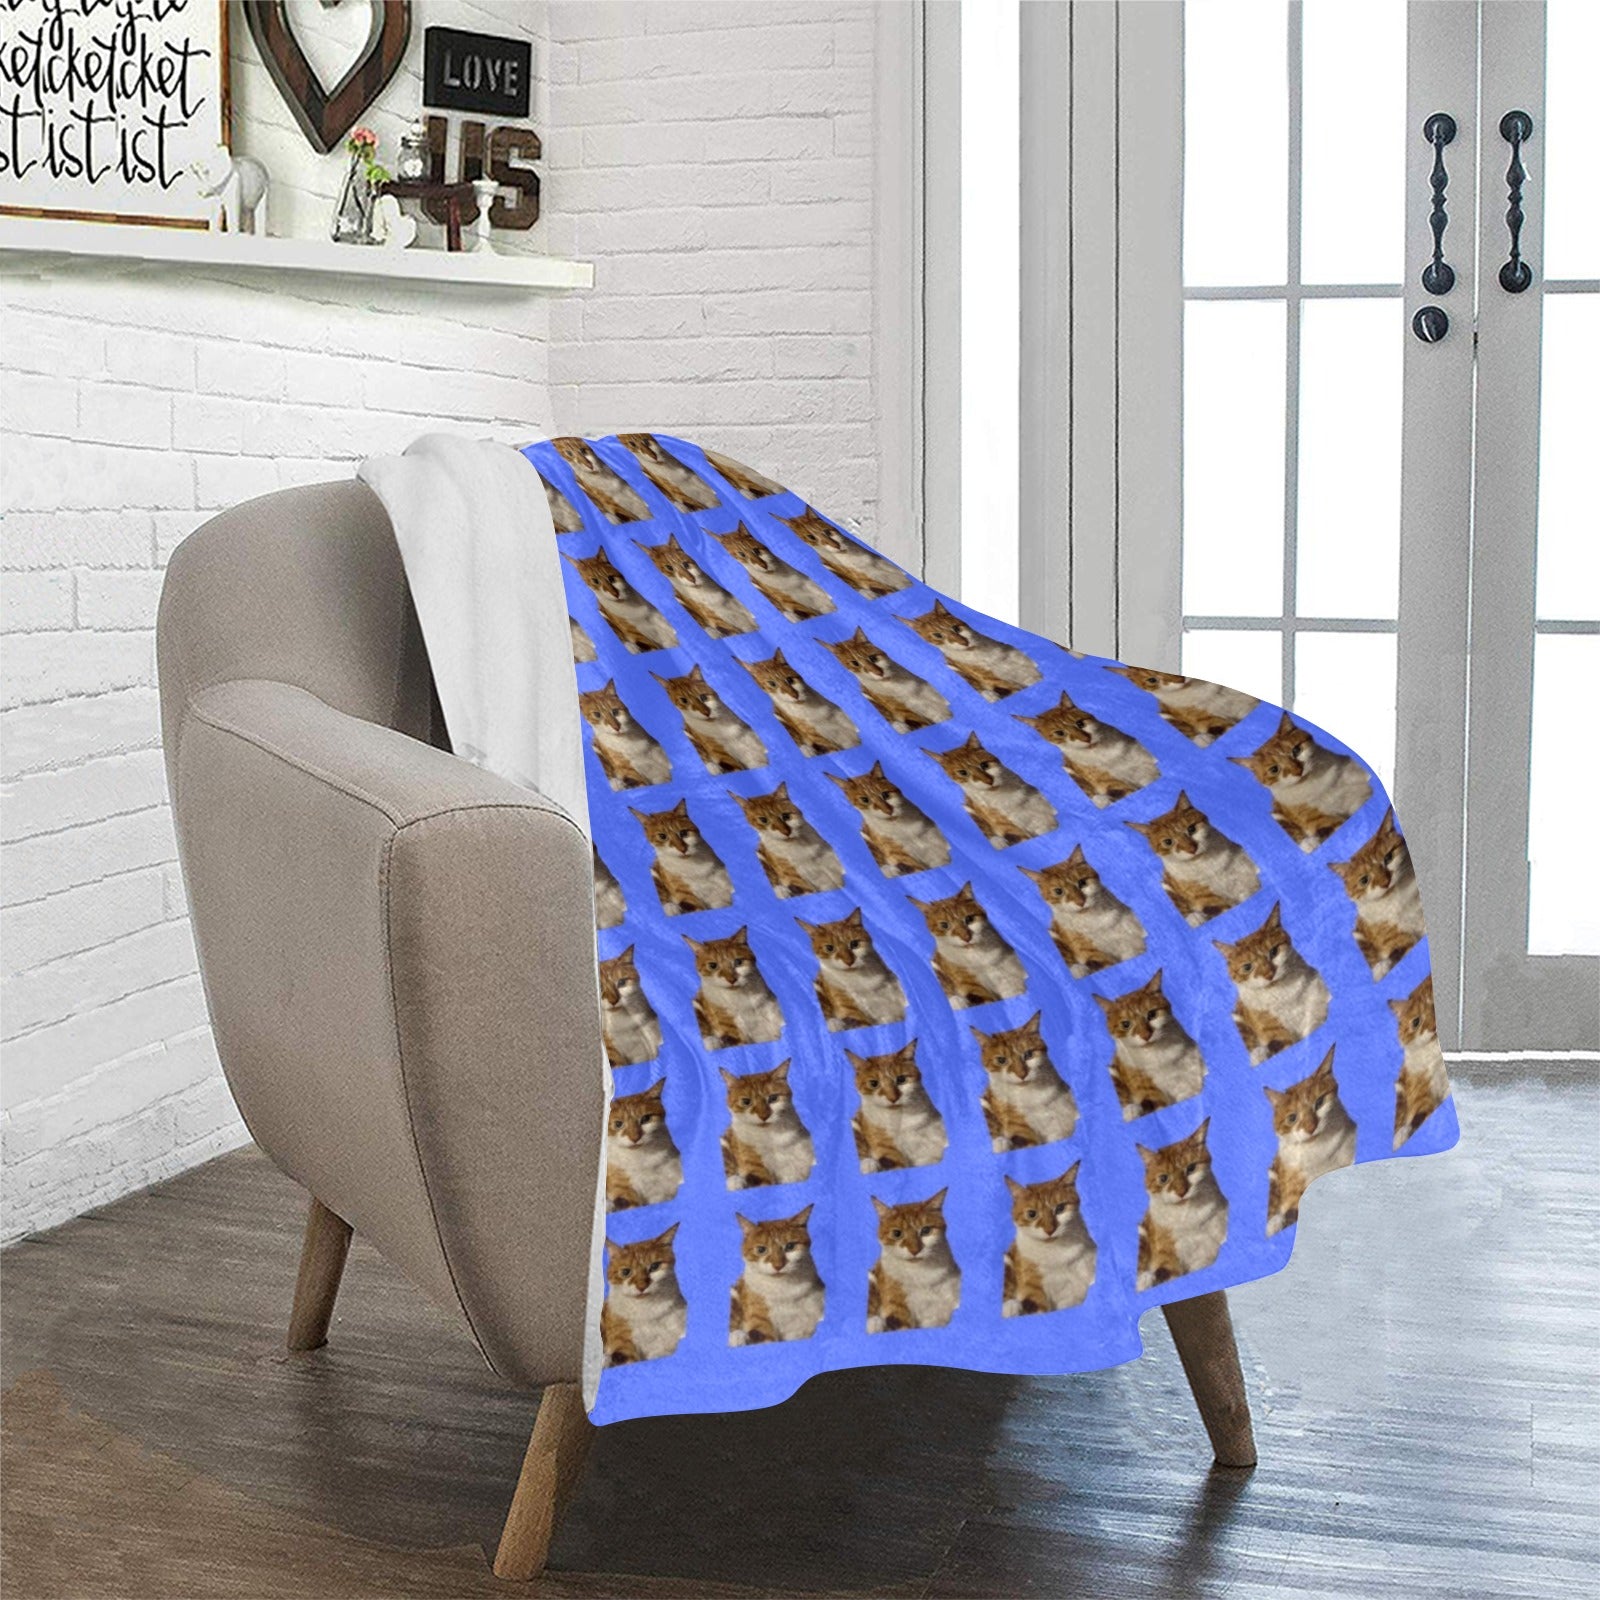 Diane's Cat Blanket